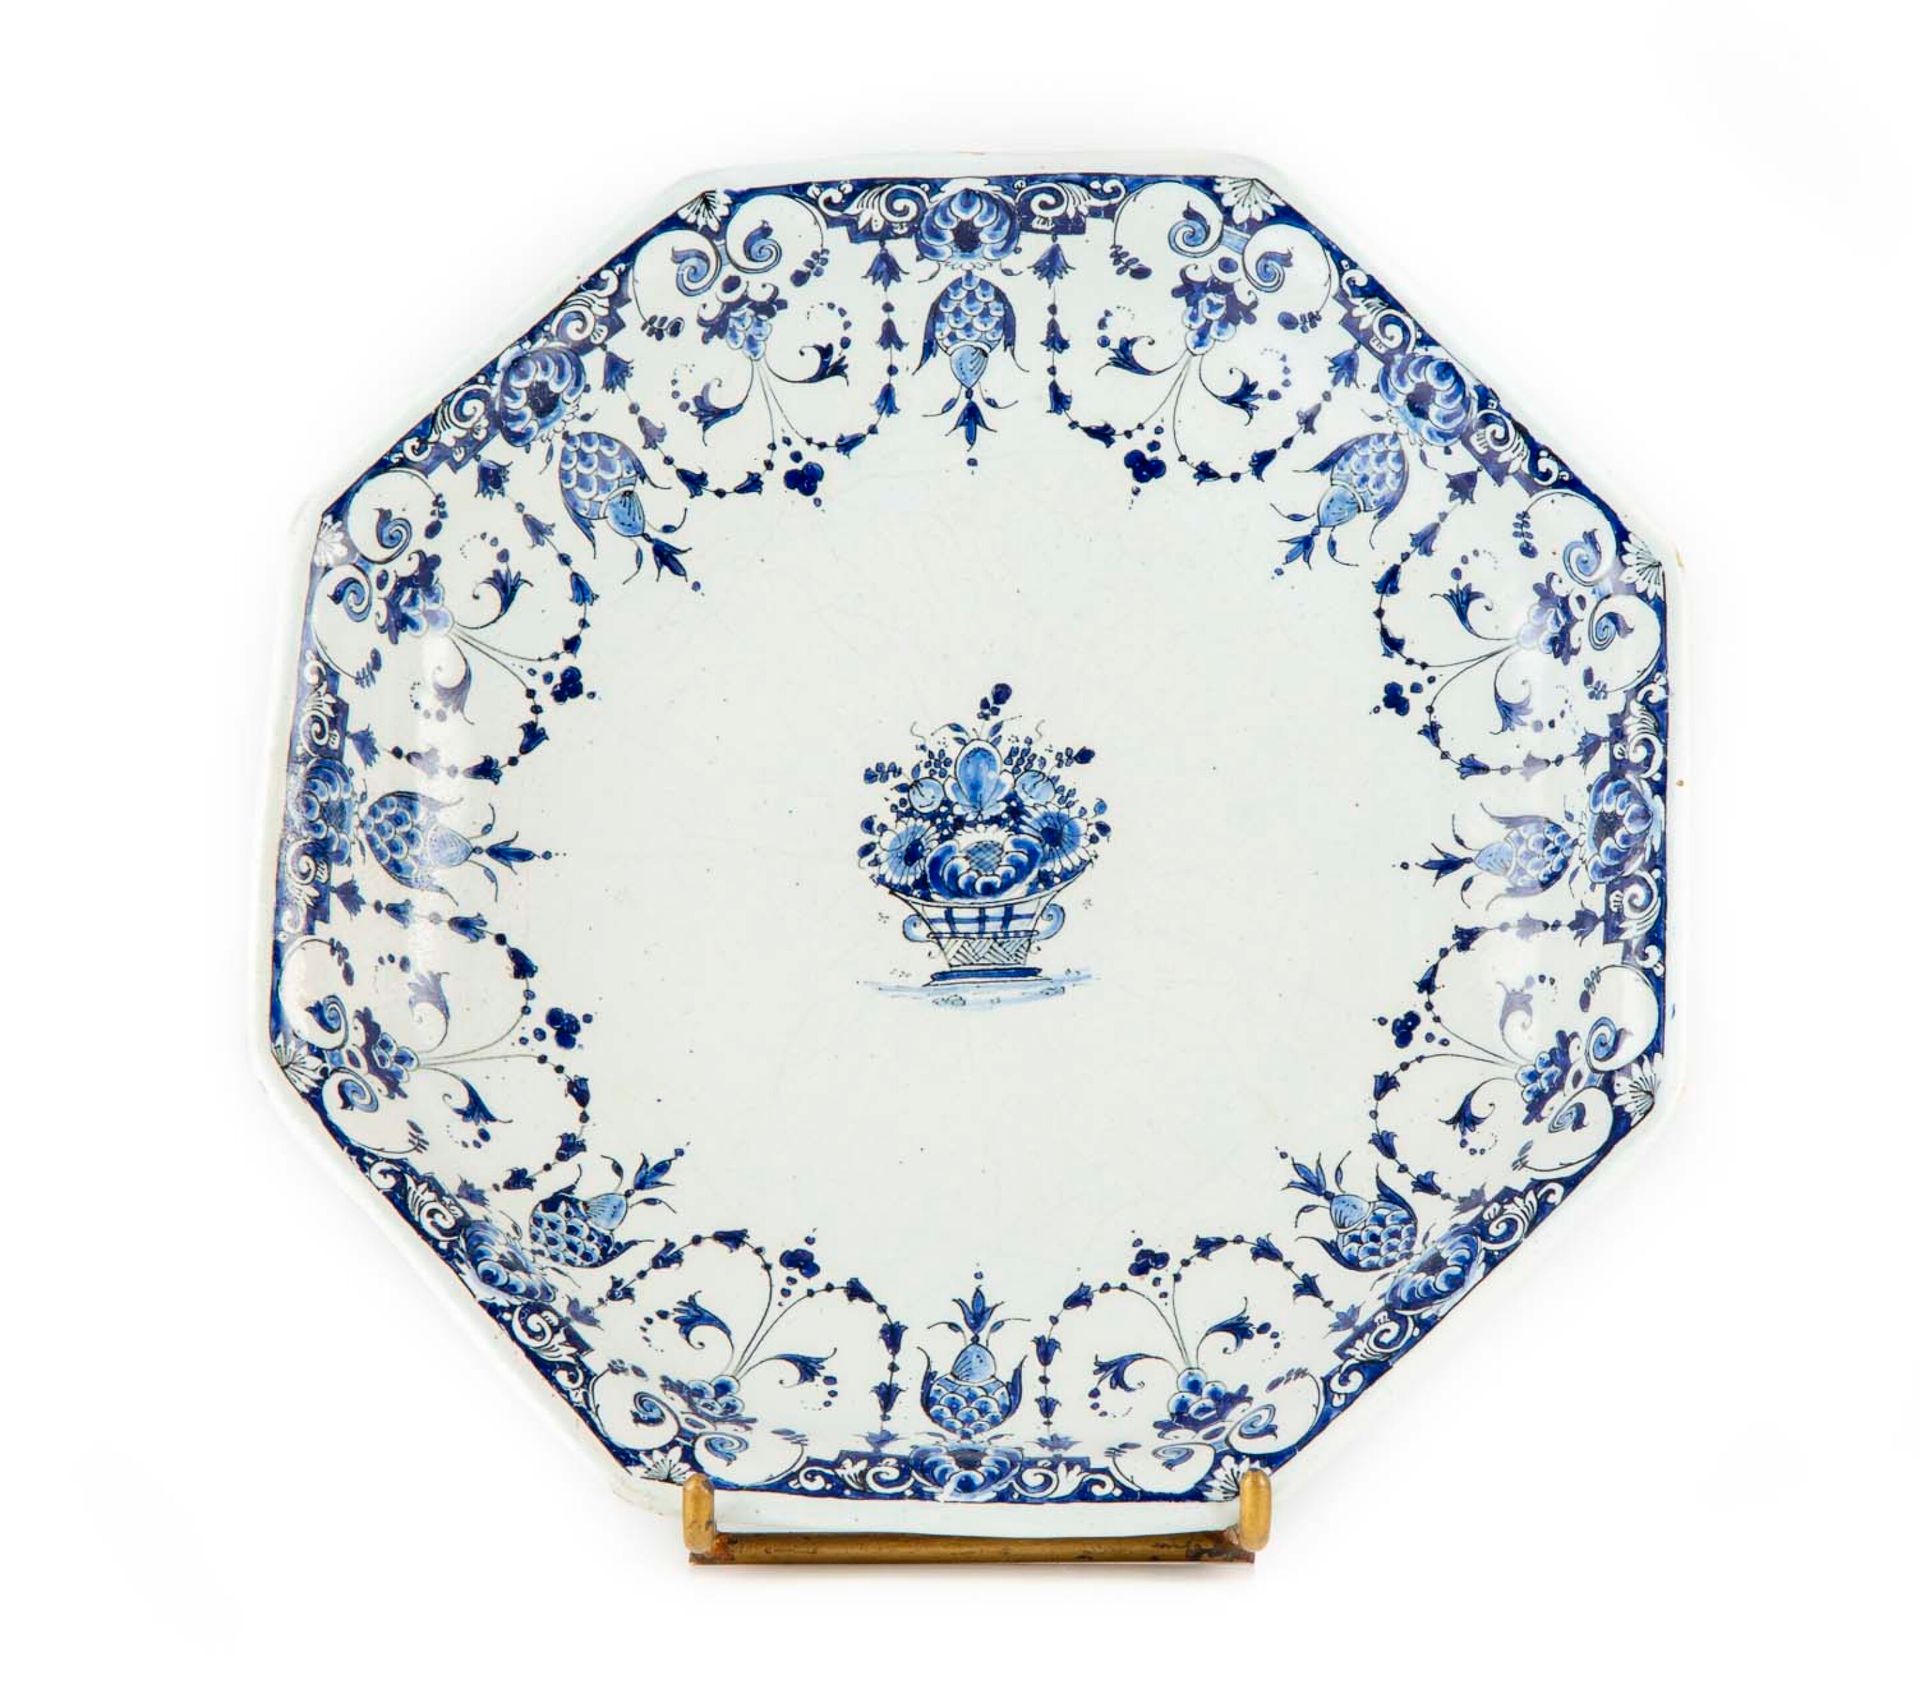 ROUEN ROUEN制造 - 十八世纪

饰有蓝白相间的羊角花和花篮的陶罐

划痕